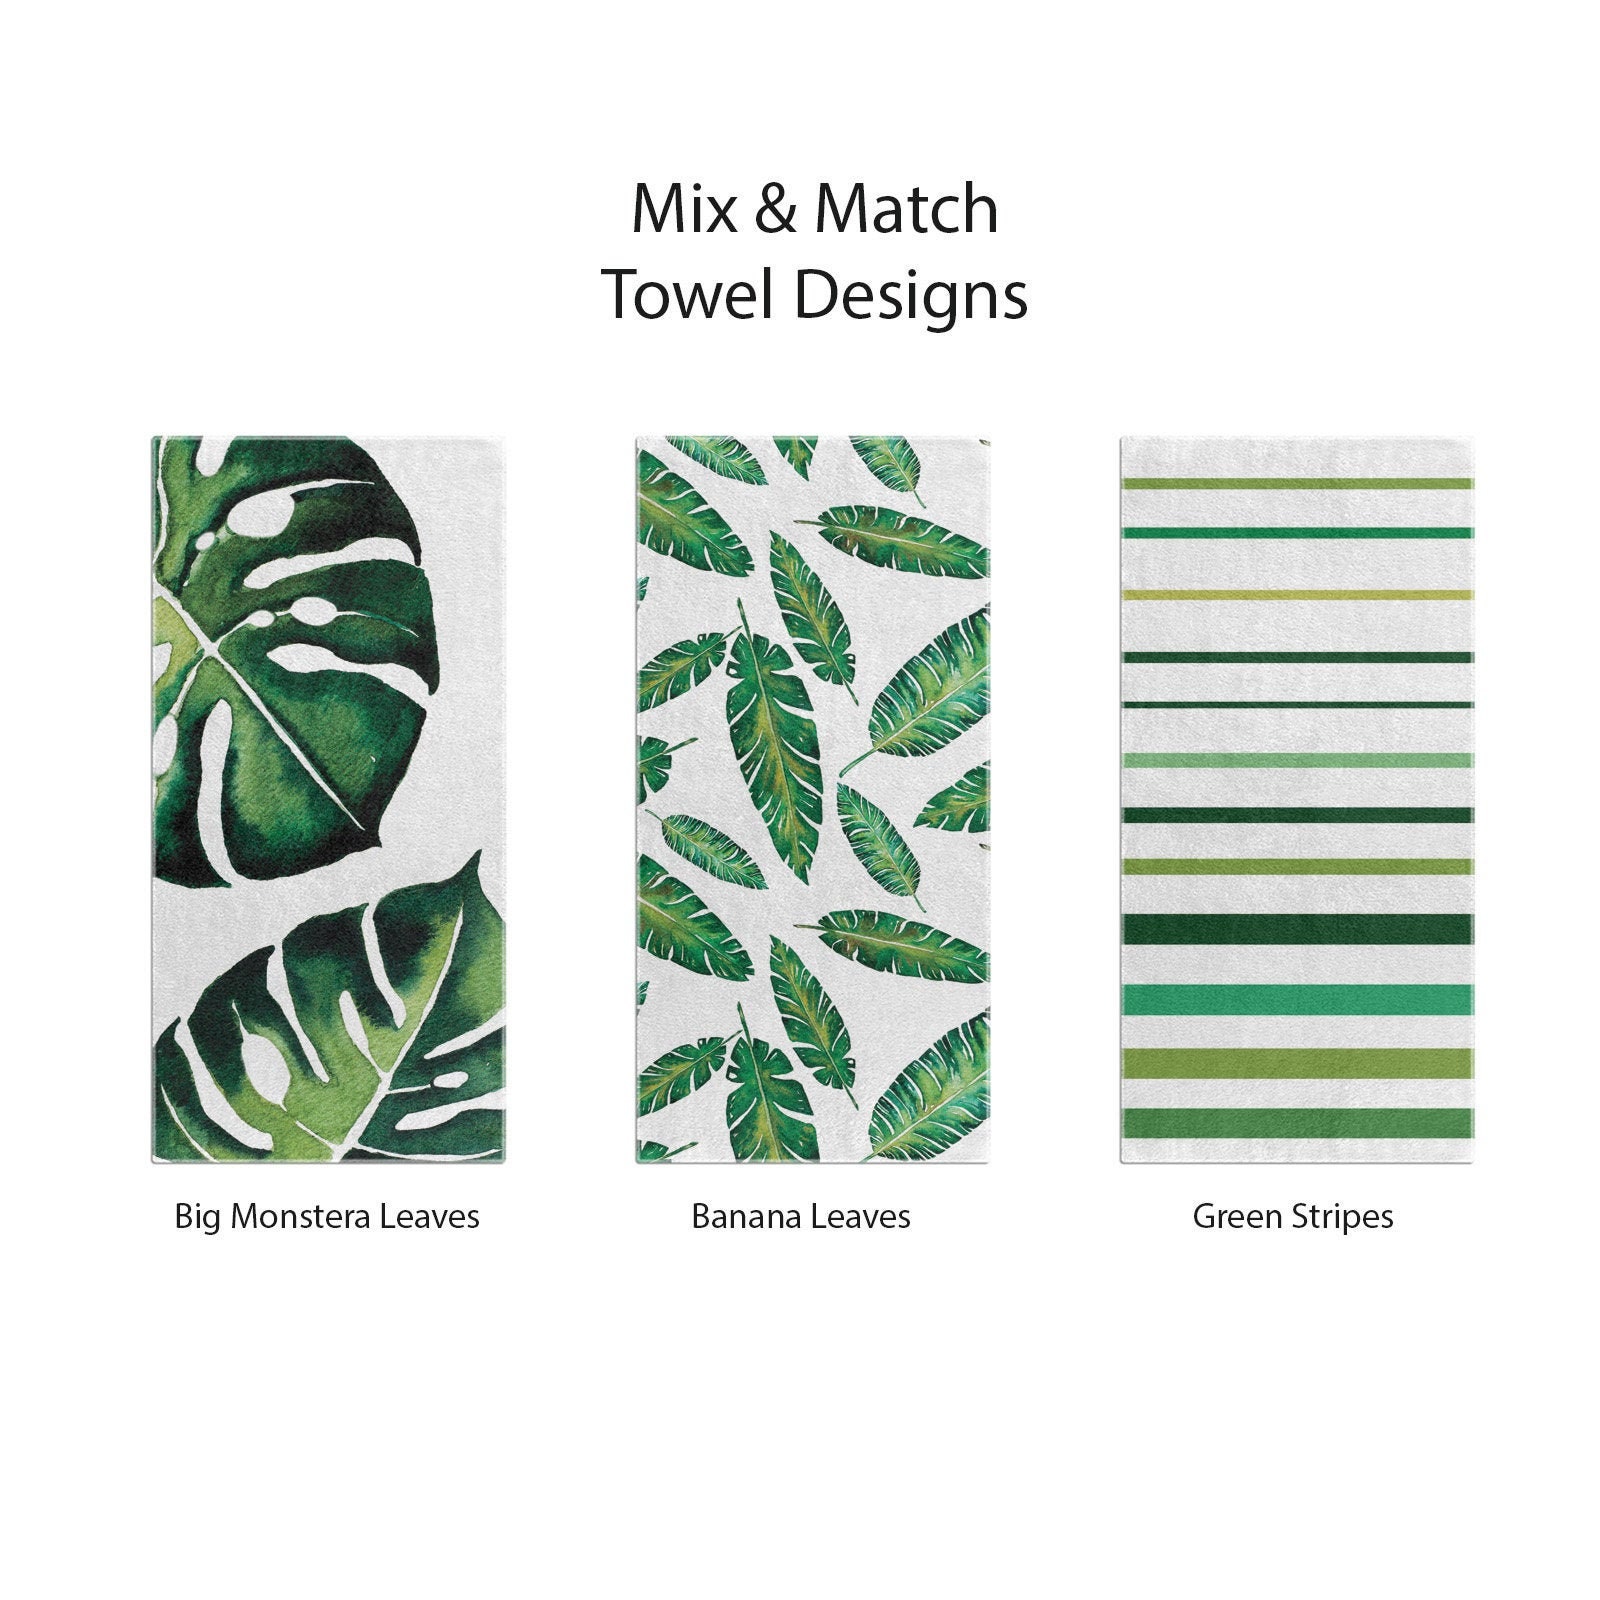 Microfiber Kitchen Towels: Tropical Leaves